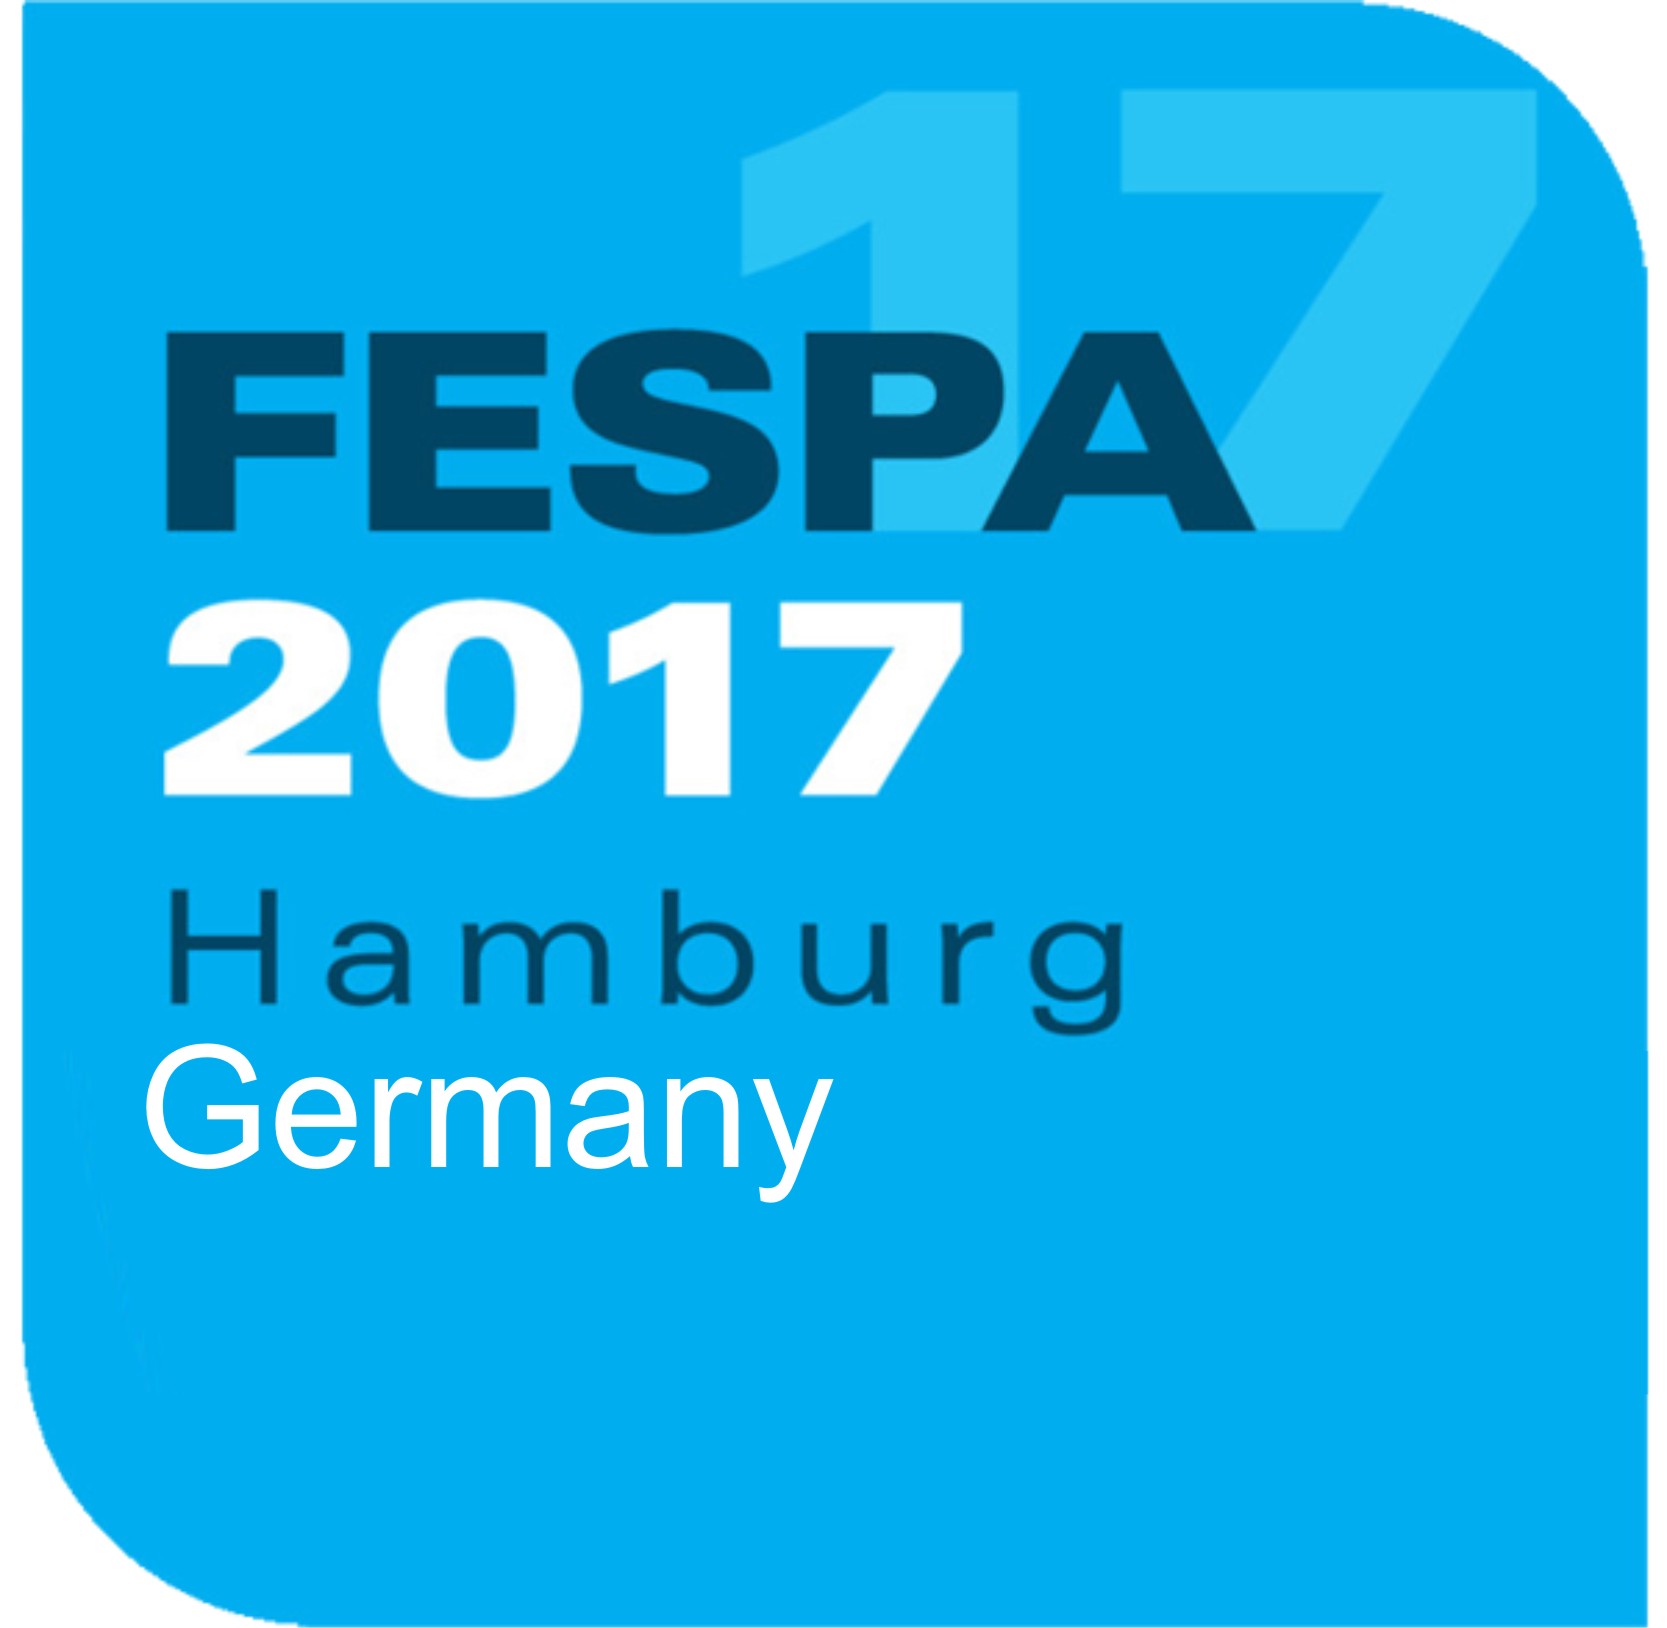 SUCCESS STORY FROM FESPA, HAMBURG GERMANY 2017